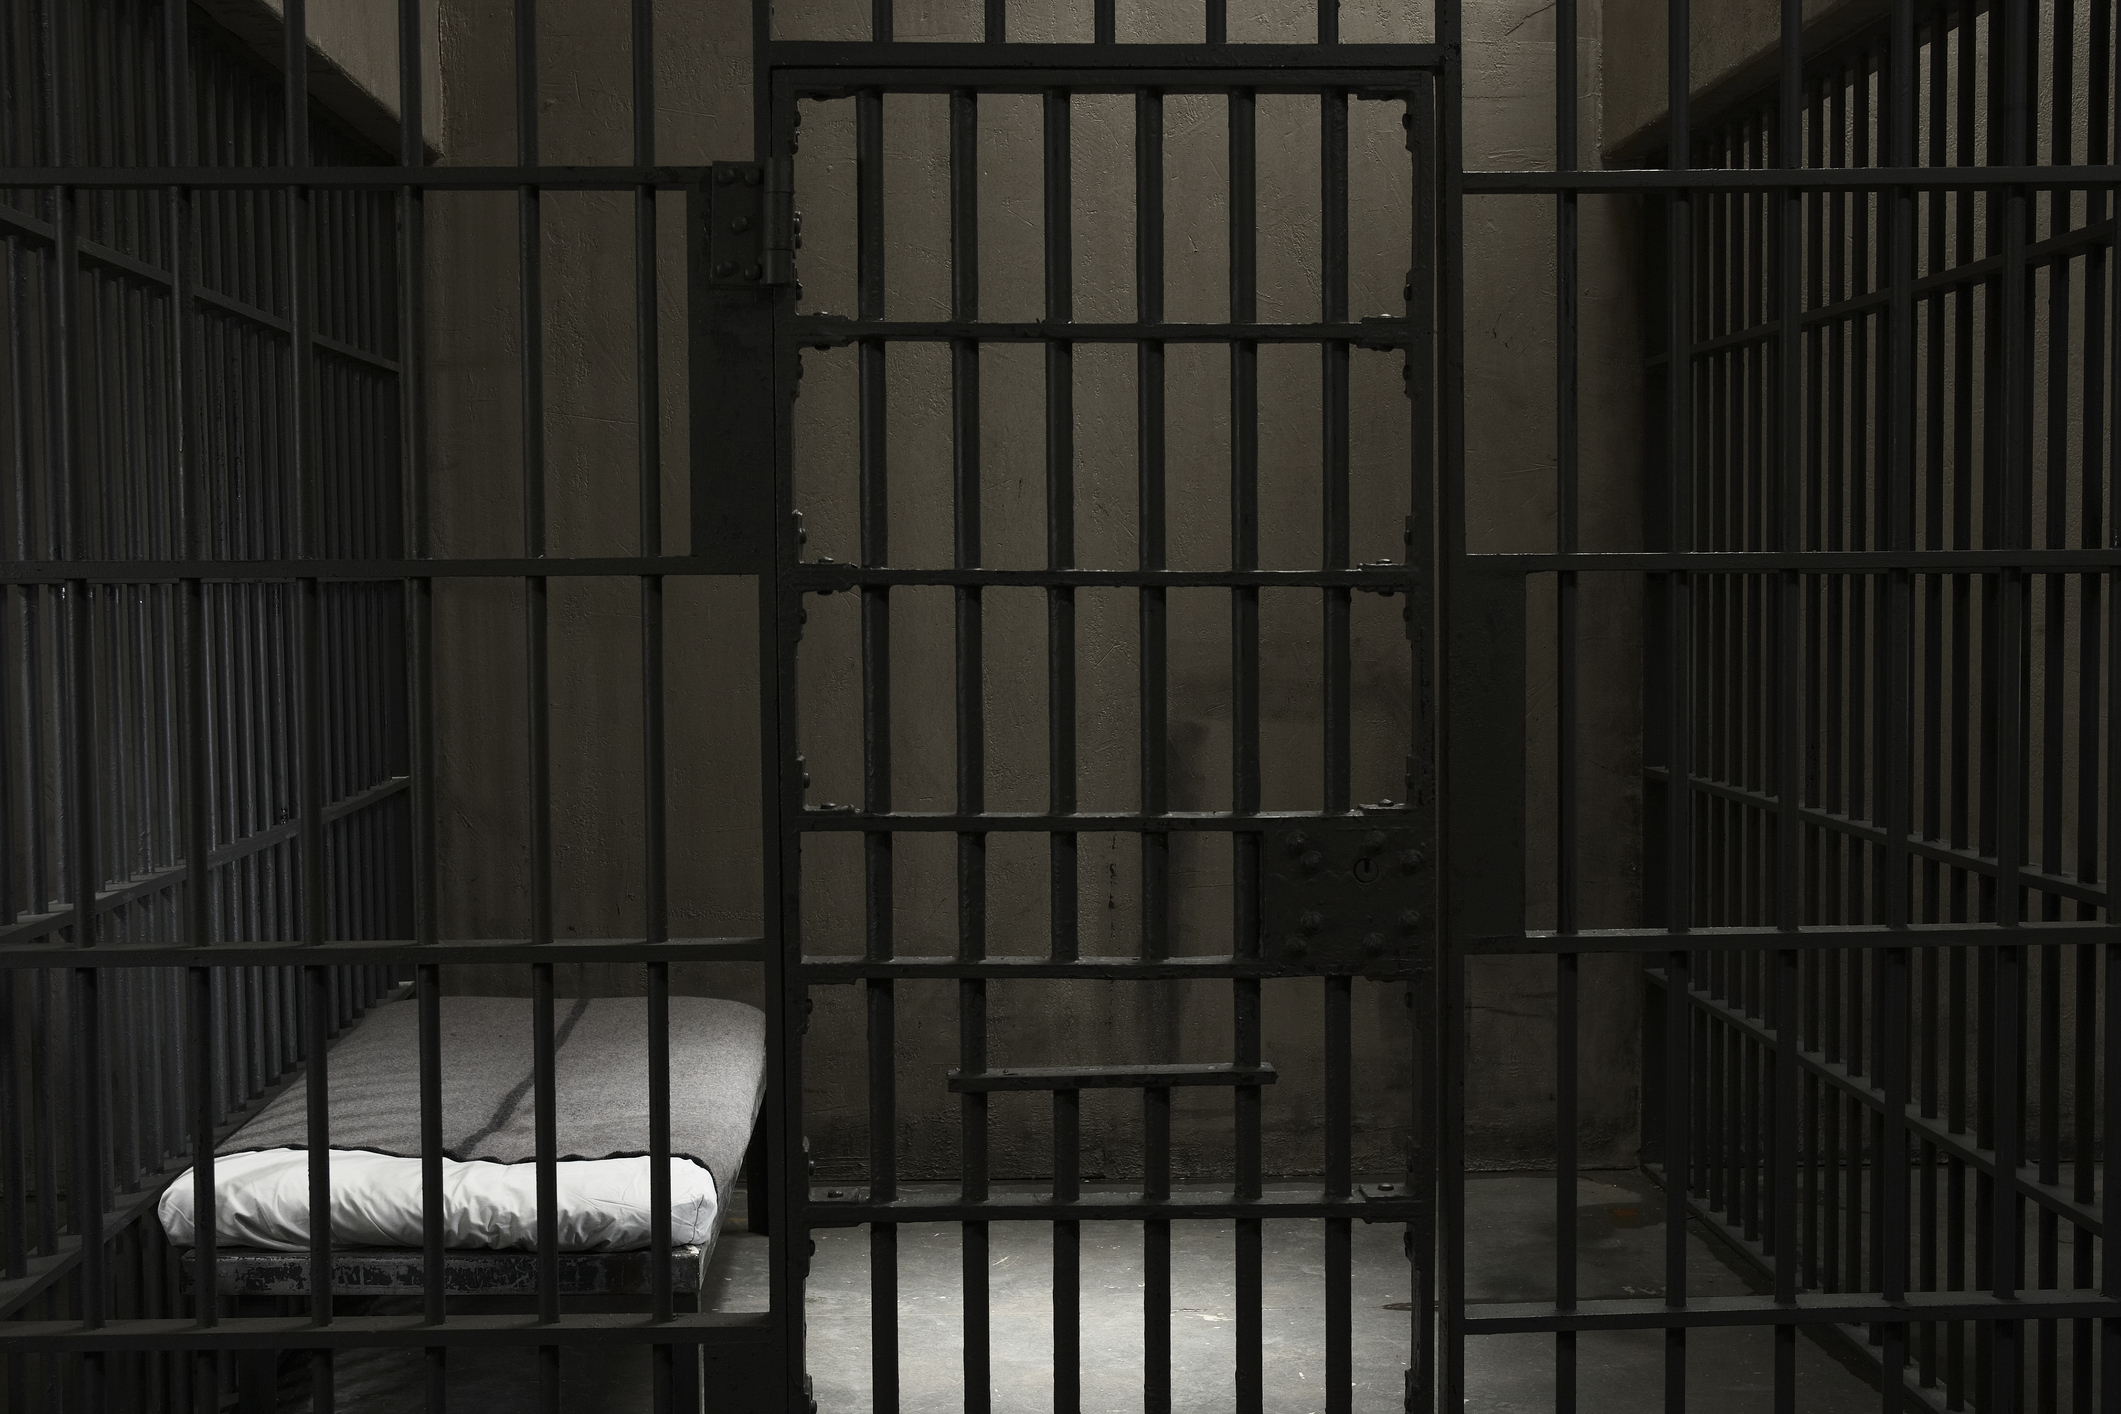 An empty jail cell